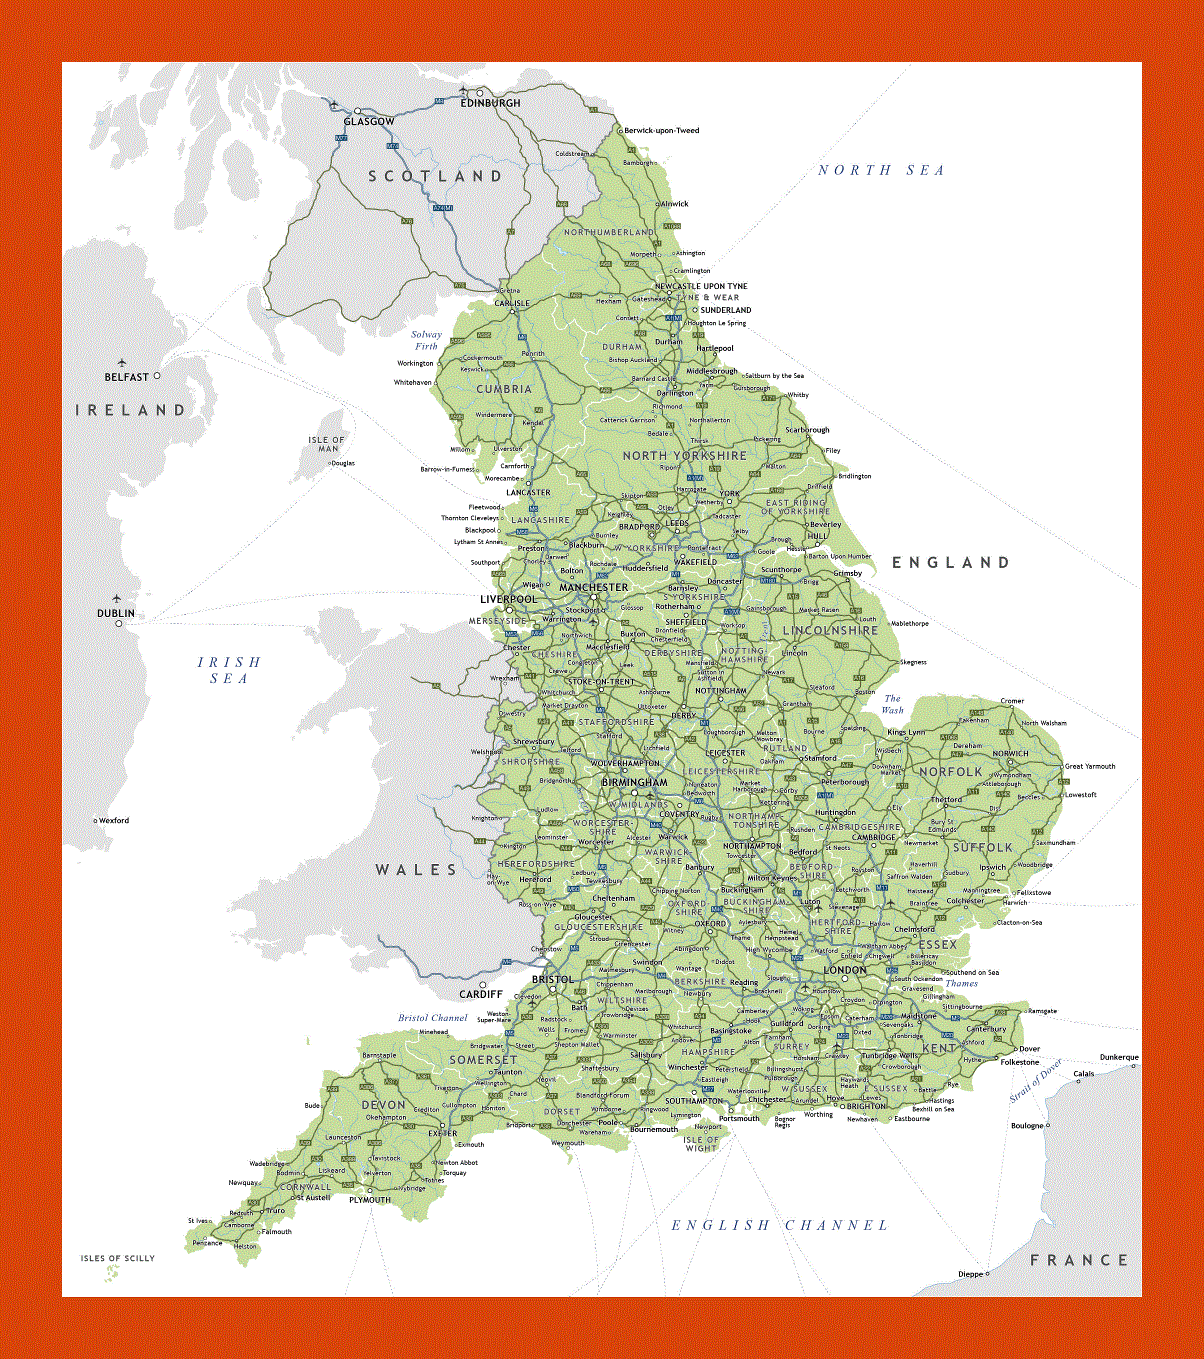 Highways map of England